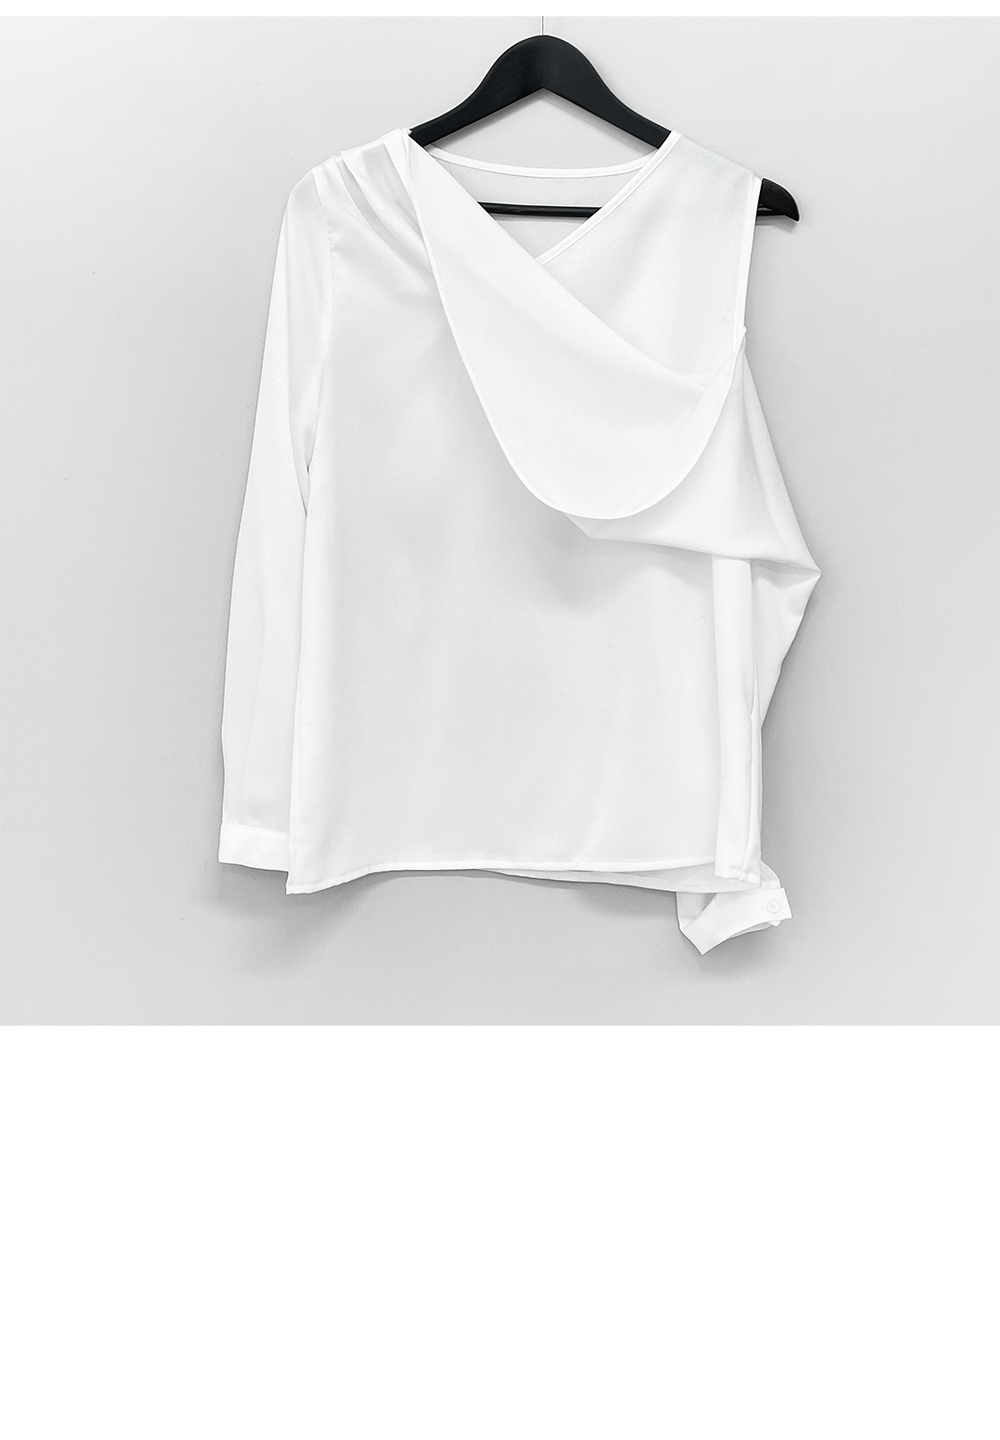 sleeveless white color image-S3L16